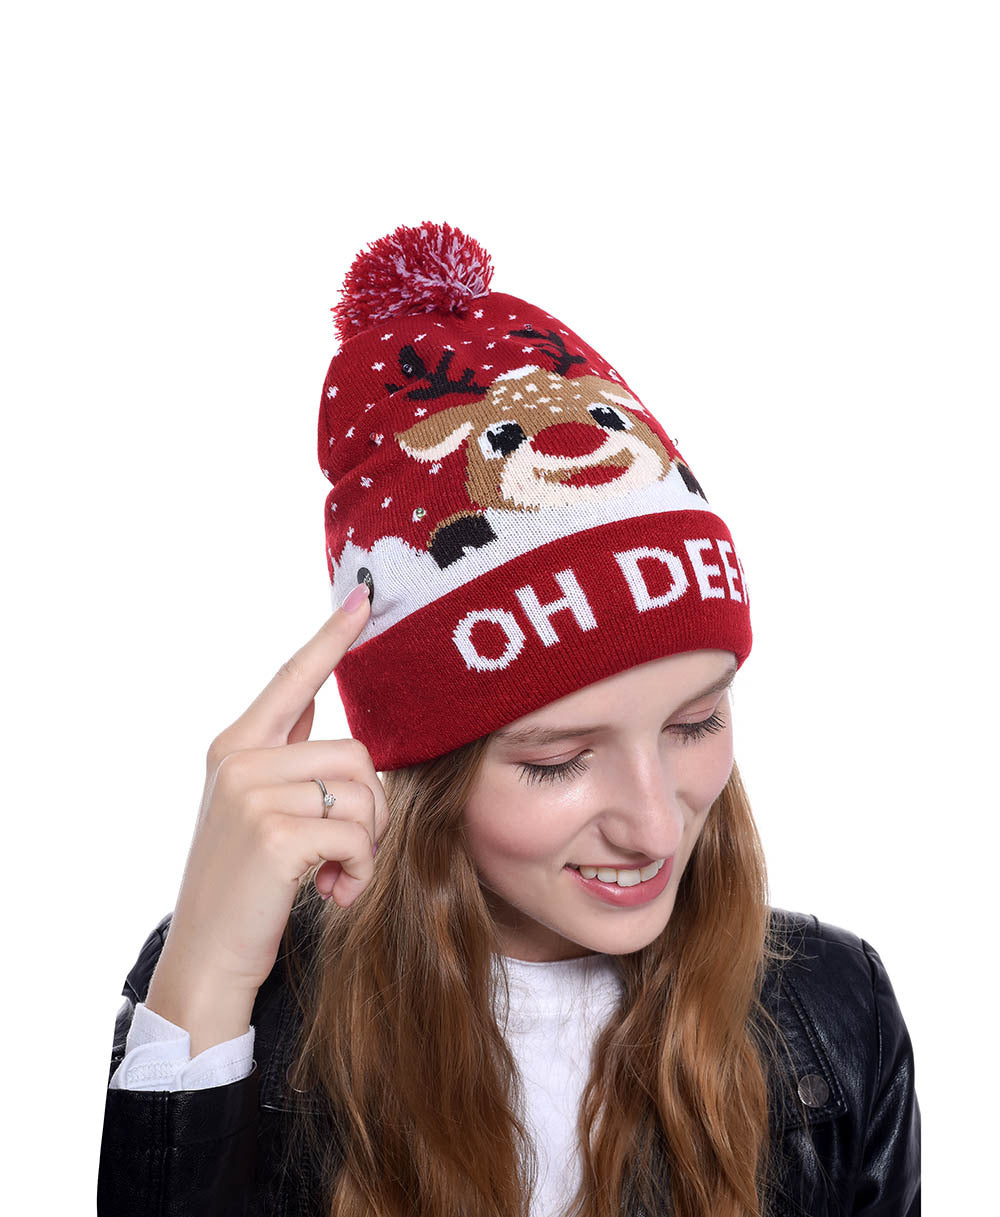 Christmas Deer Snowflake Jacquard Knitted Hat